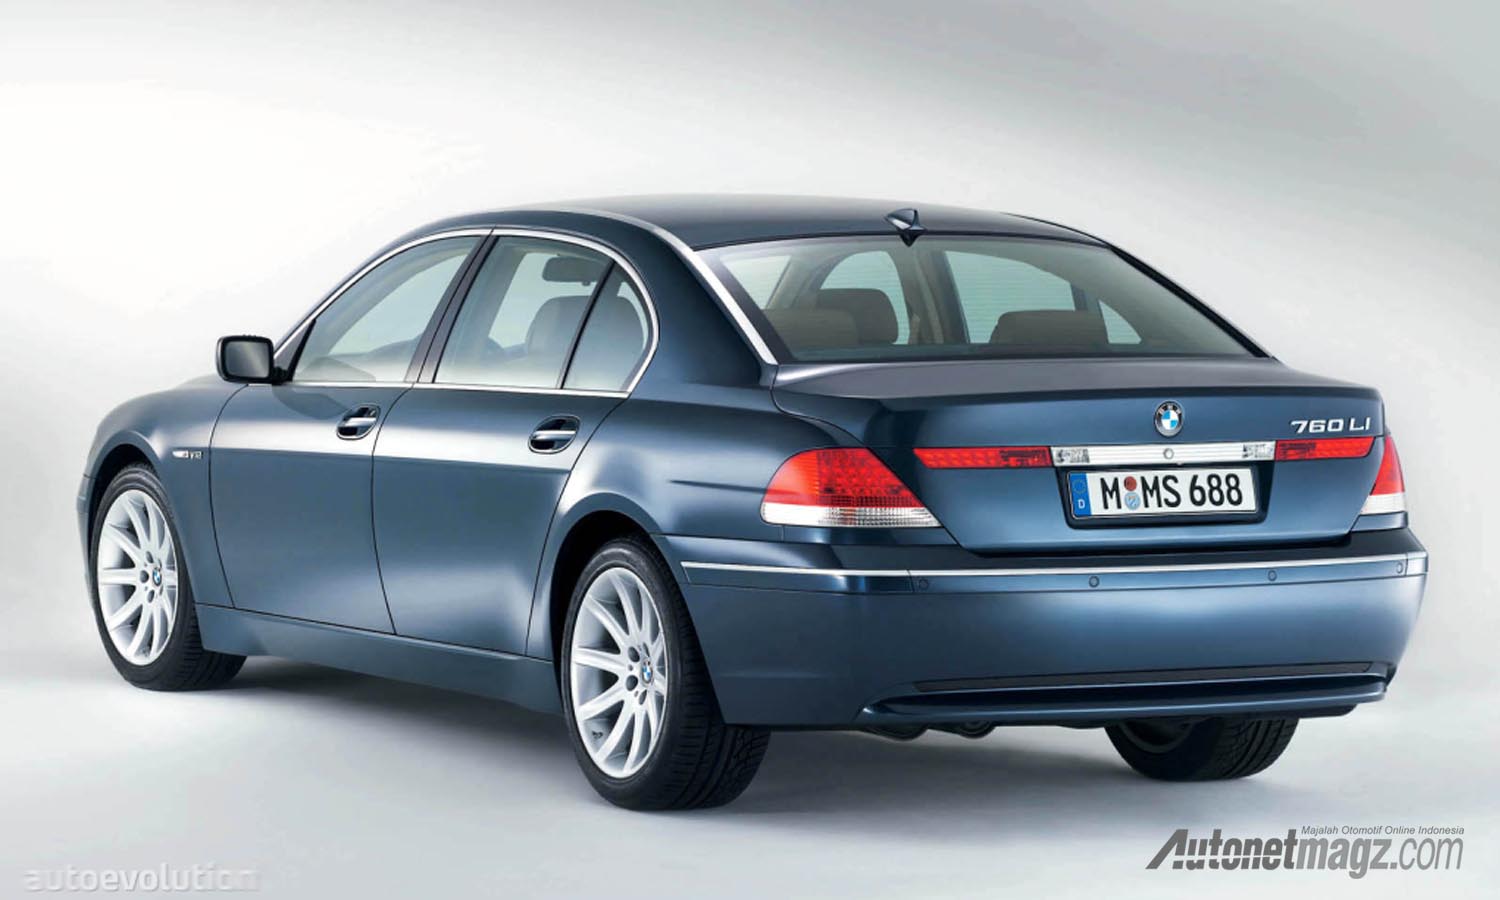 Berita, bmw seri 7 direcall: BMW Recall 45.484 Unit BMW Seri 7 Terkait Masalah Pintu